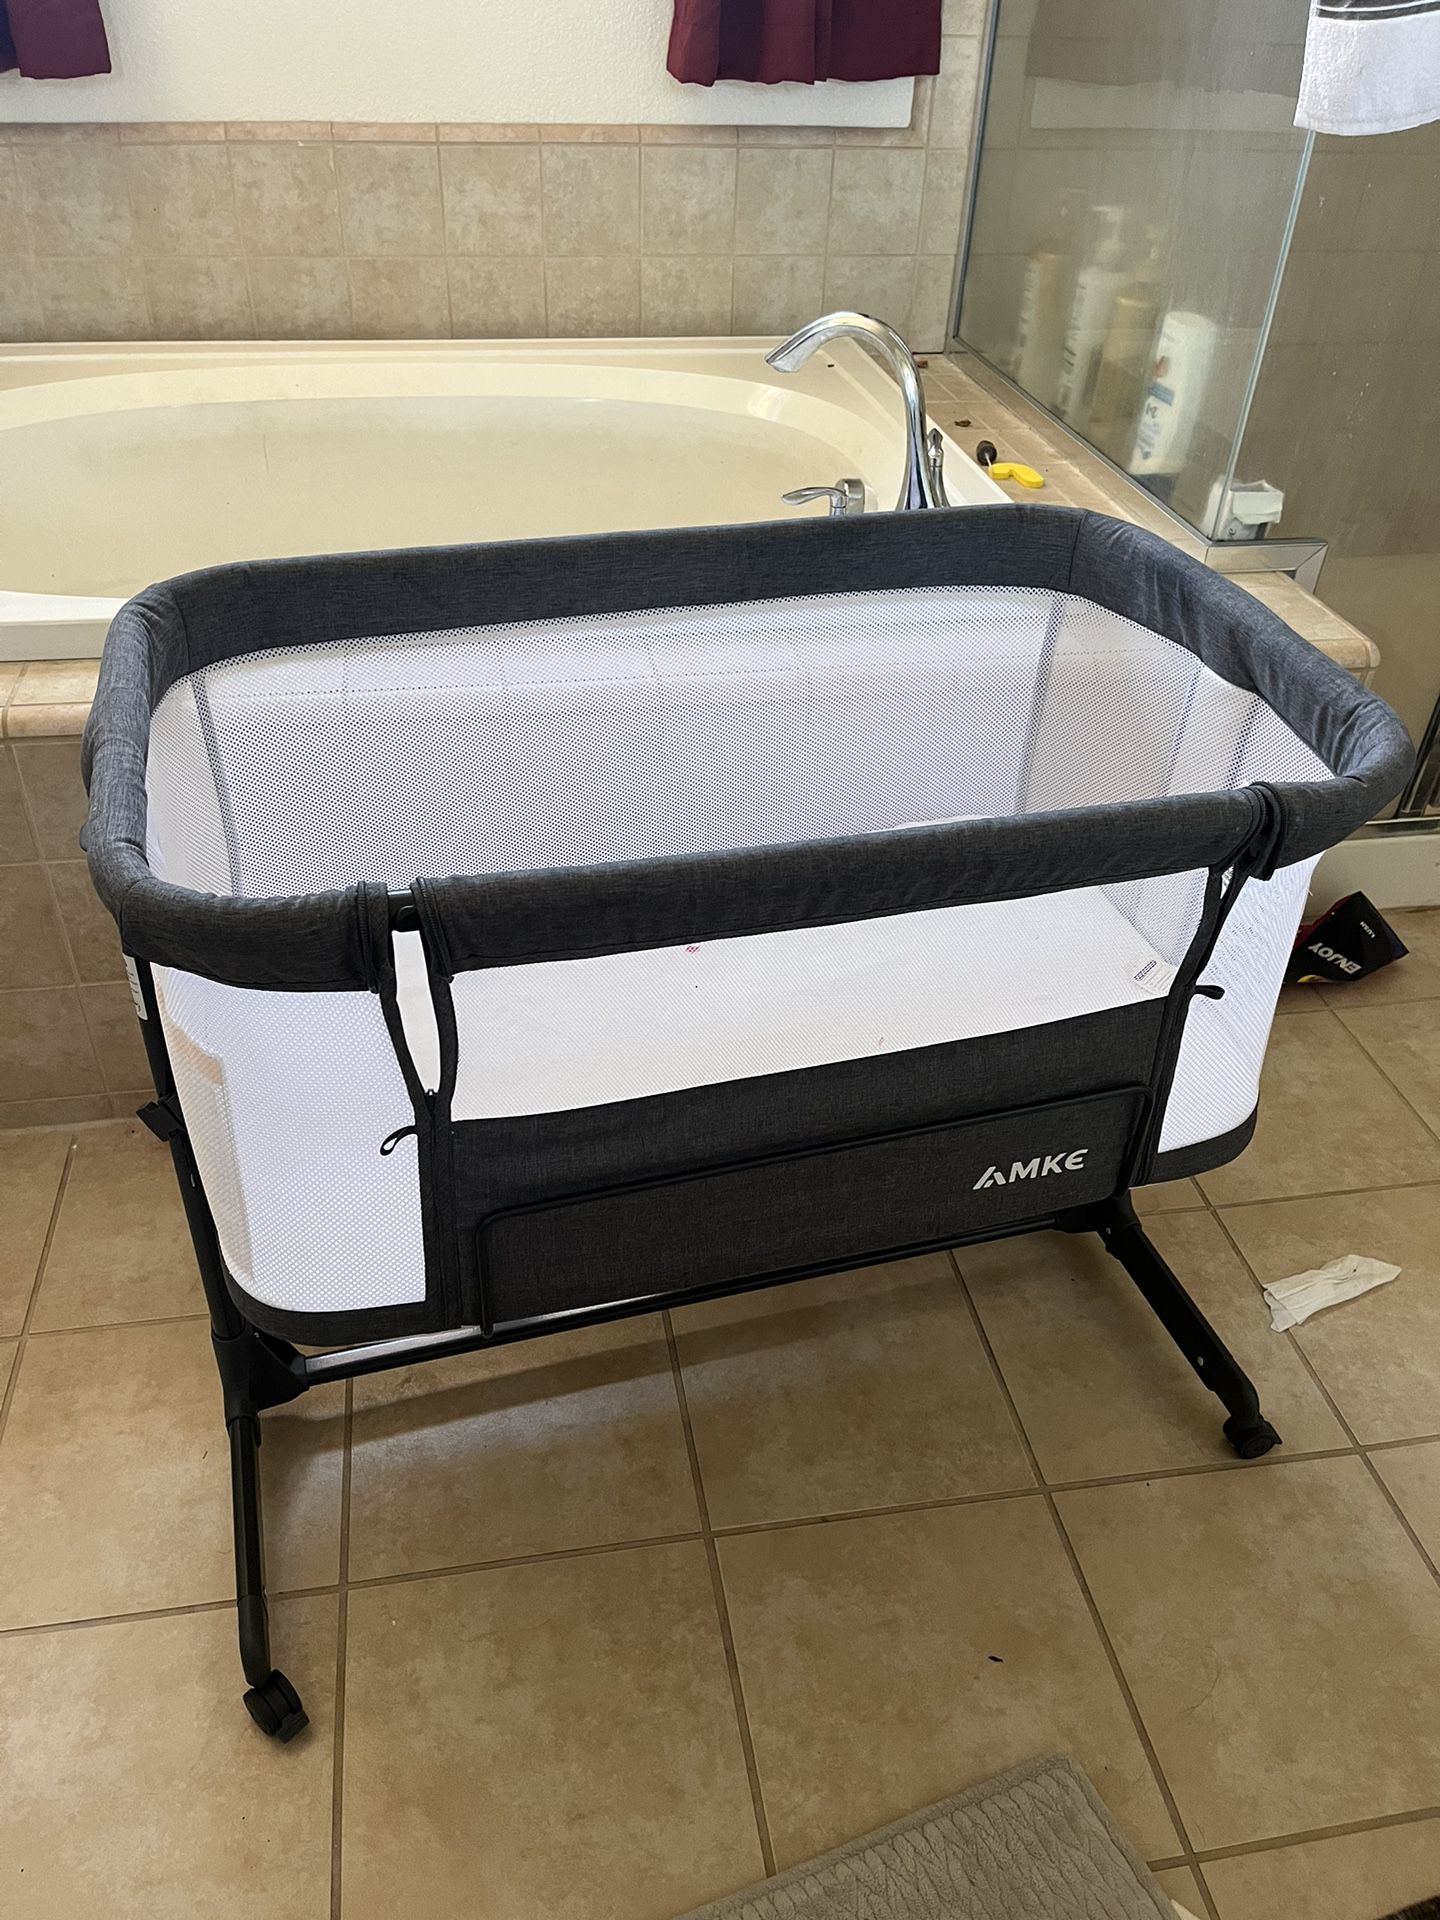 AMKE Baby Bassinets,All mesh Crib Portable for Safe Co-Sleeping,Adjustable Bedside Sleeper,Baby Bed